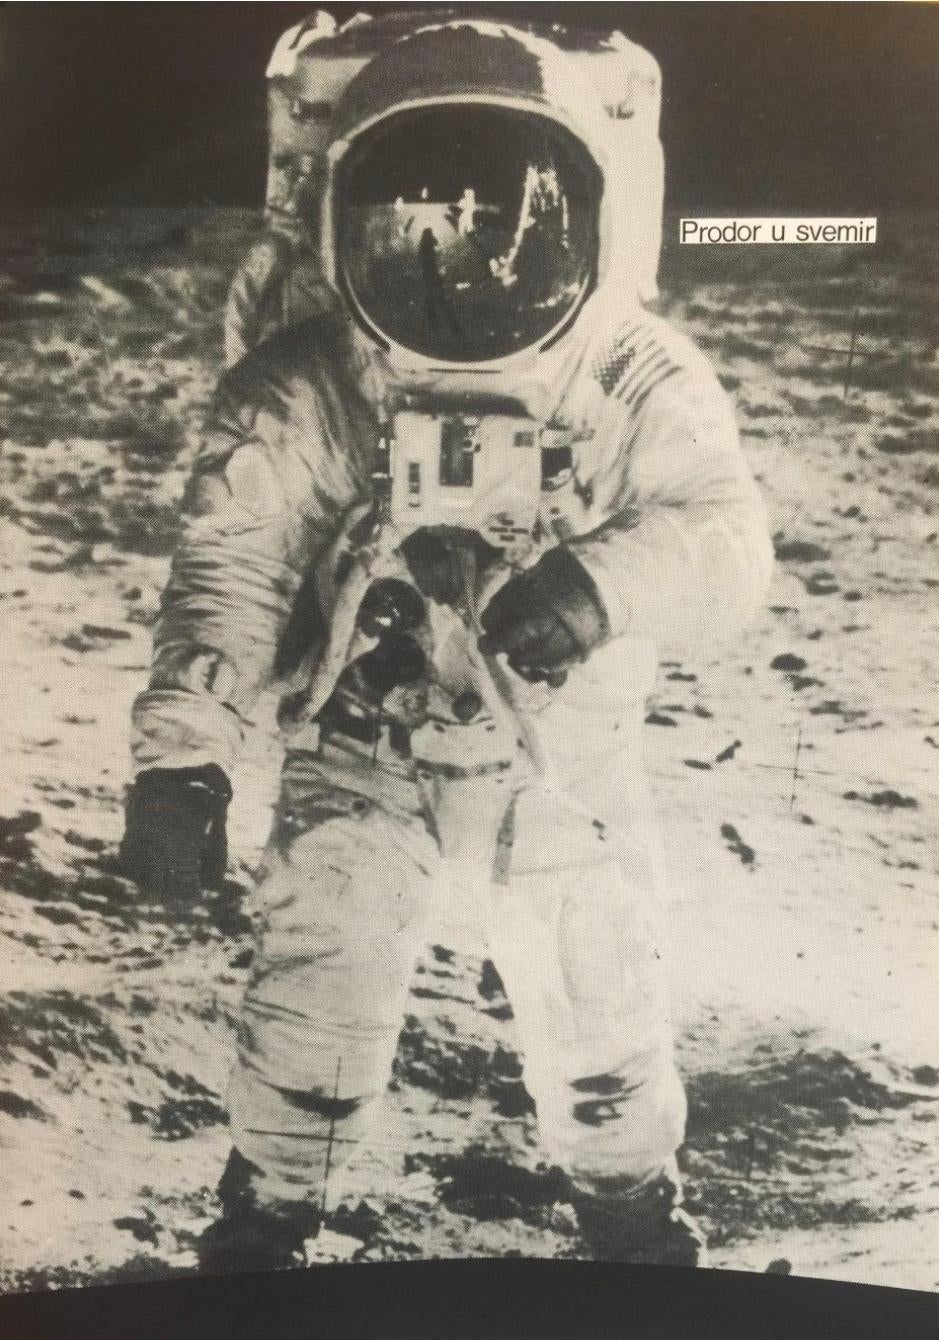 Croatian Original Vintage Poster, Boris Bucan 'PRODOR U SVEMIR' Astronaut, 1972  For Sale